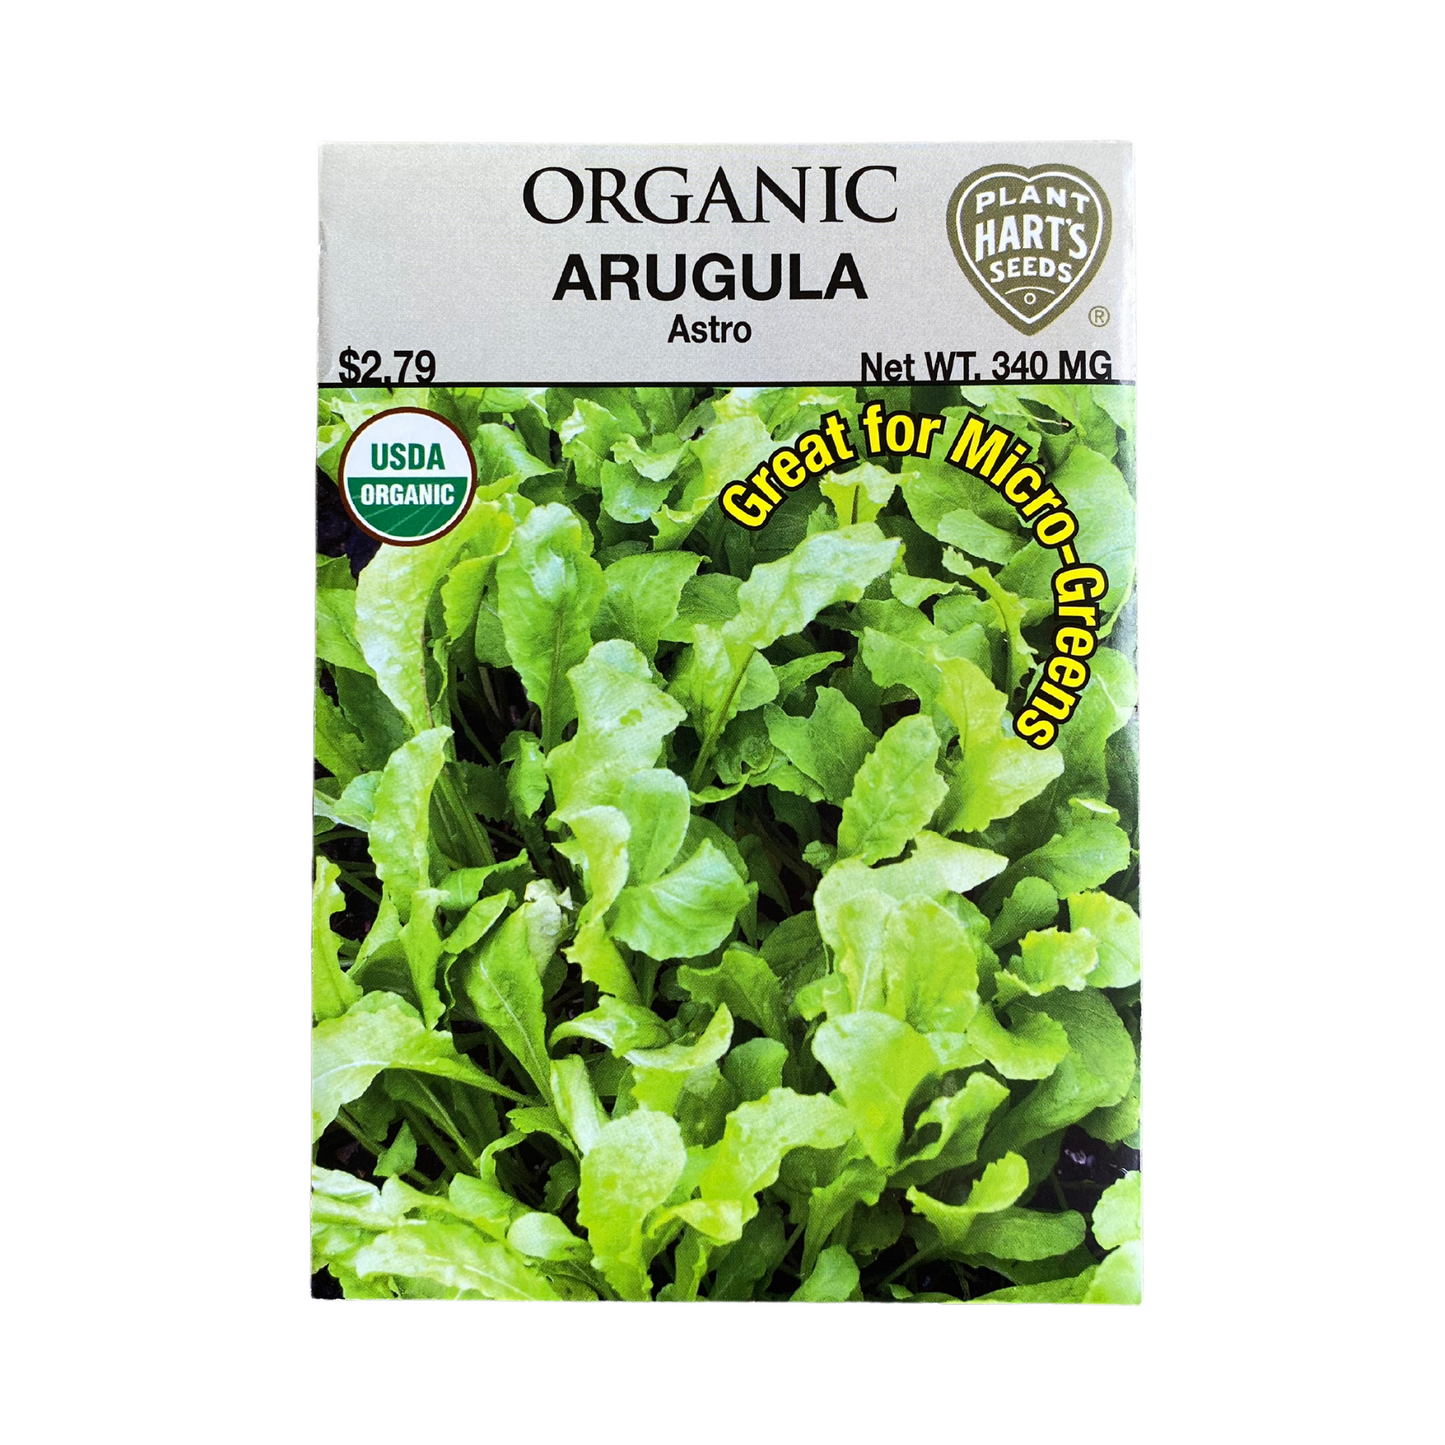 Organic Herb Arugula Astro